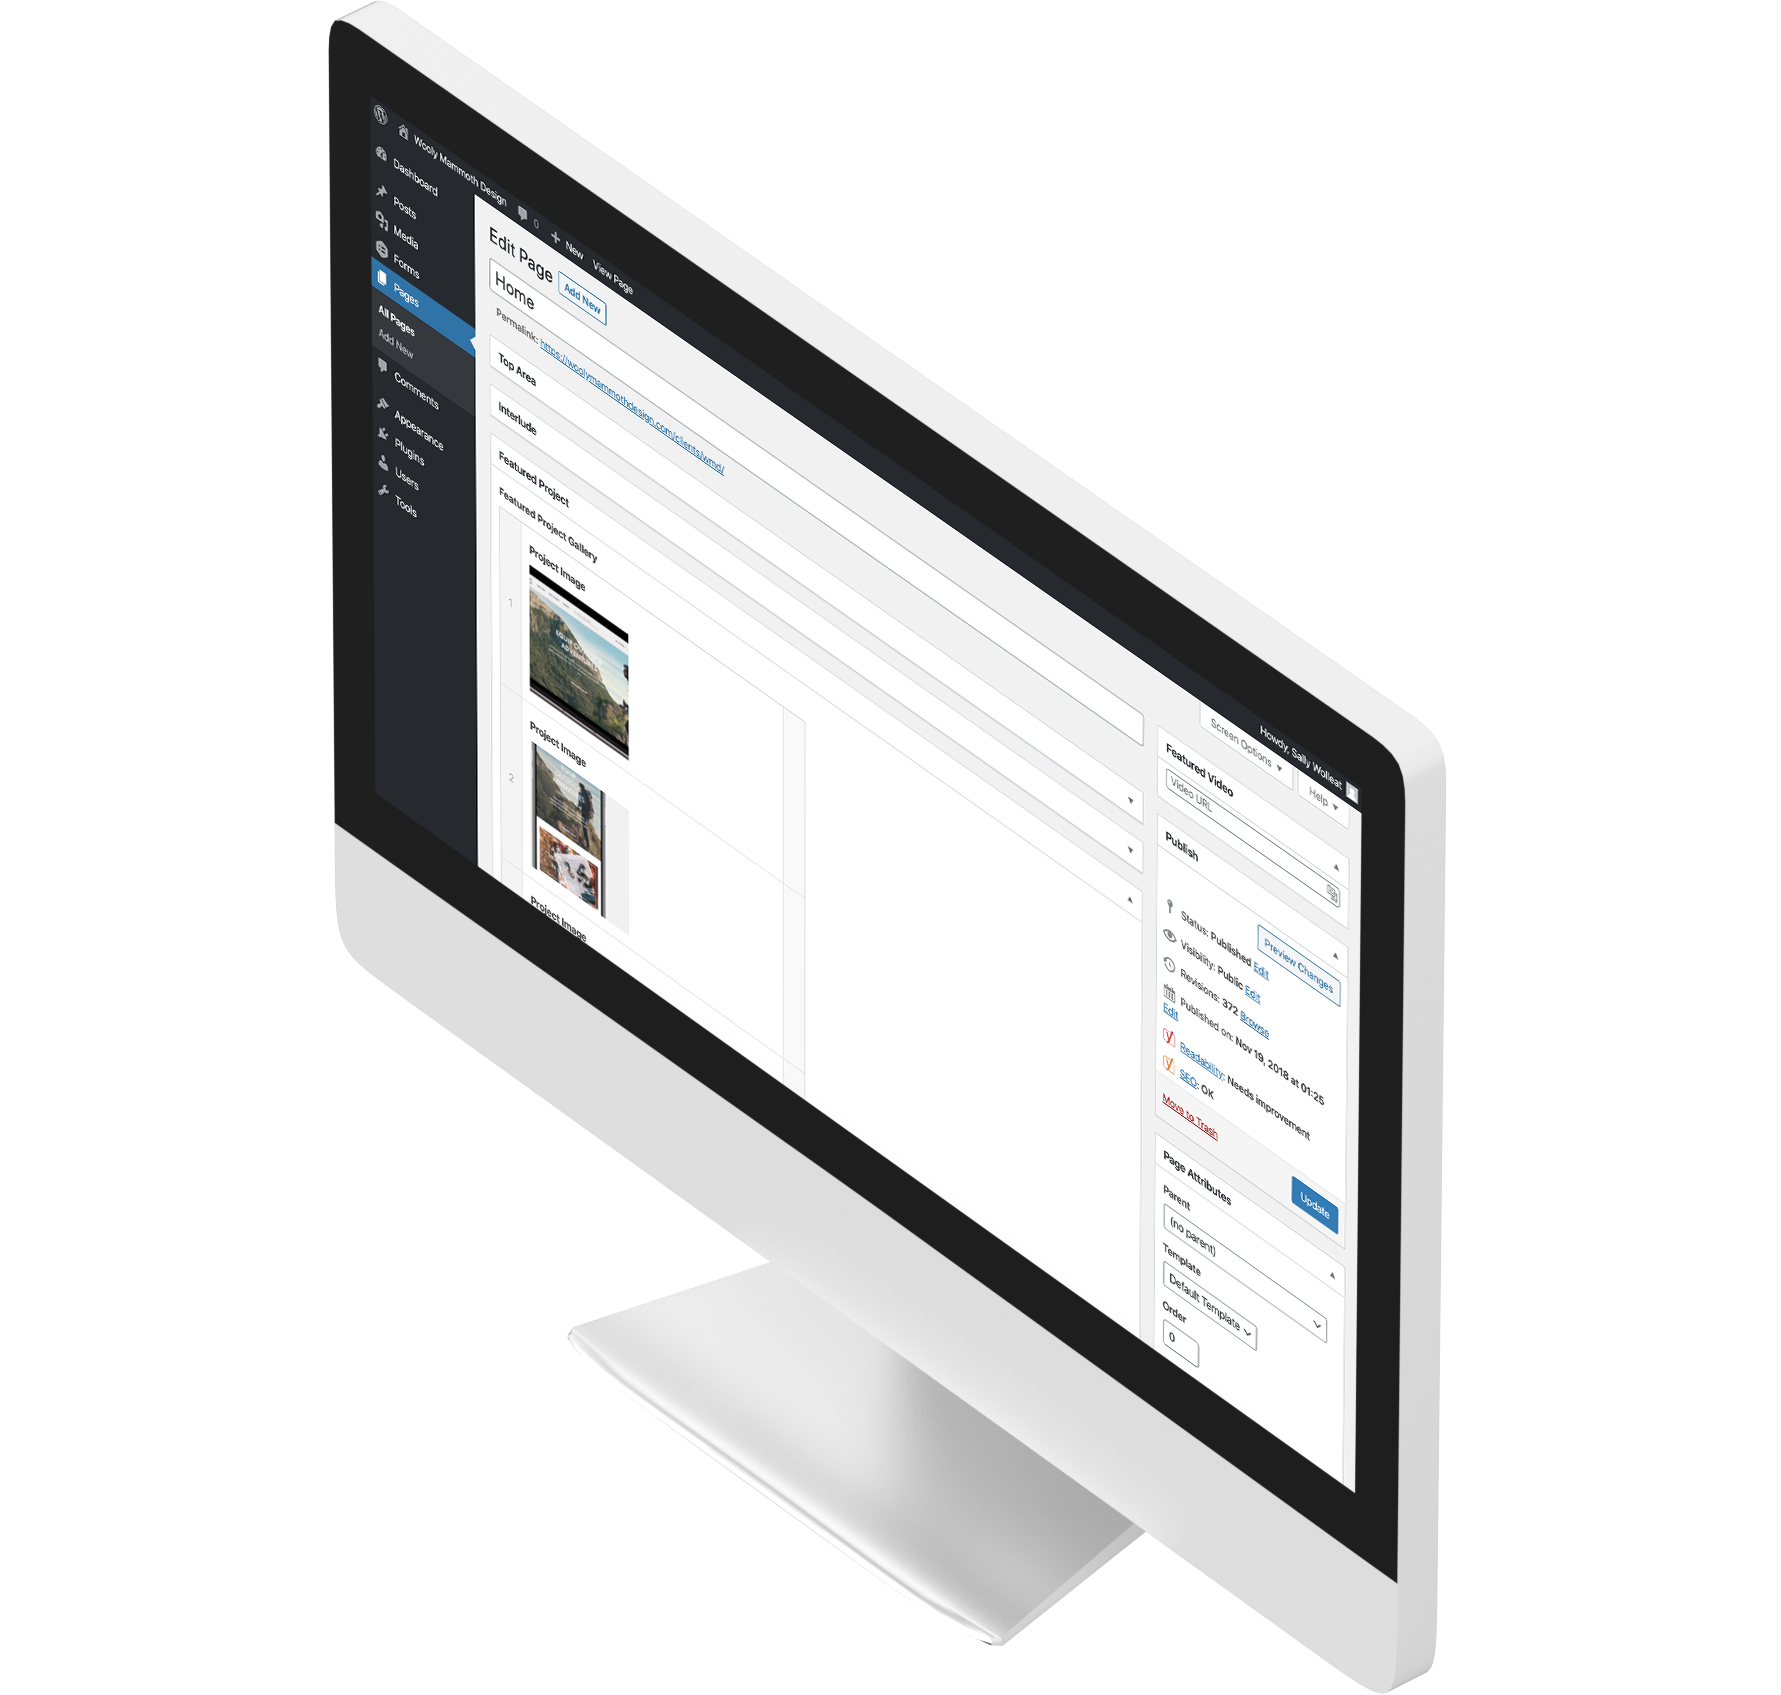 Computer screen with WordPress admin screen